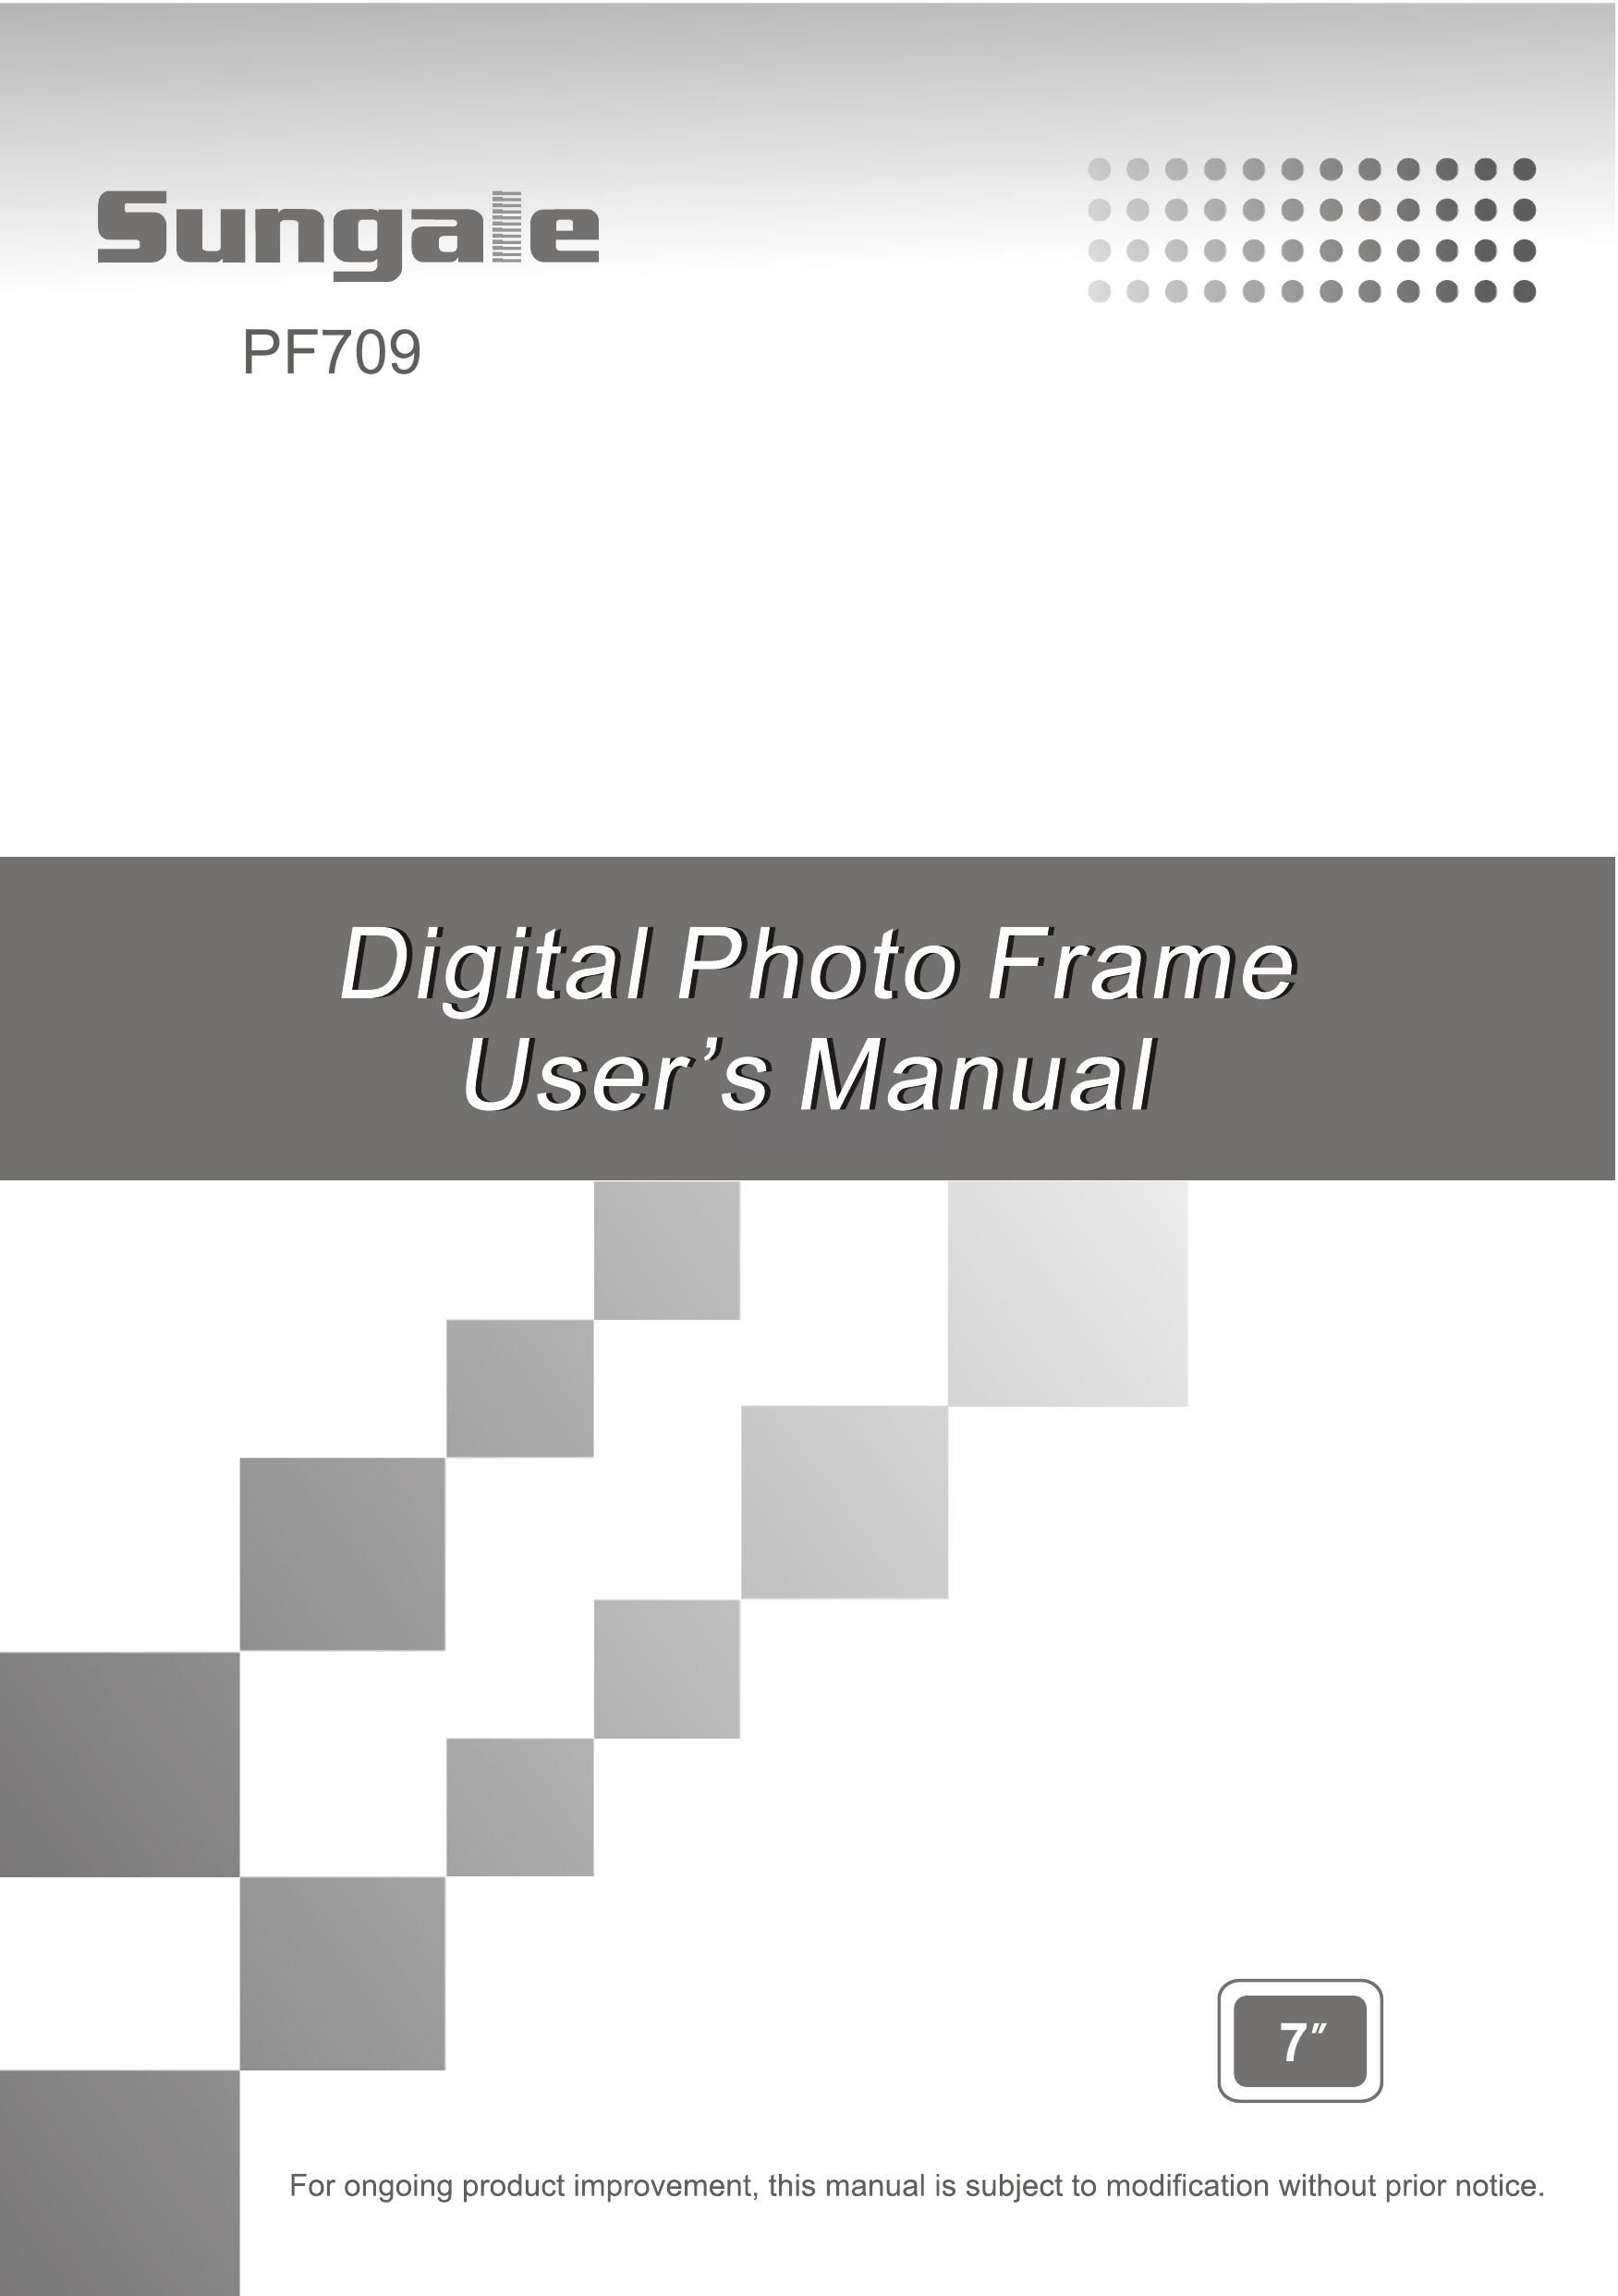 Sungale PF709 Digital Photo Frame User Manual